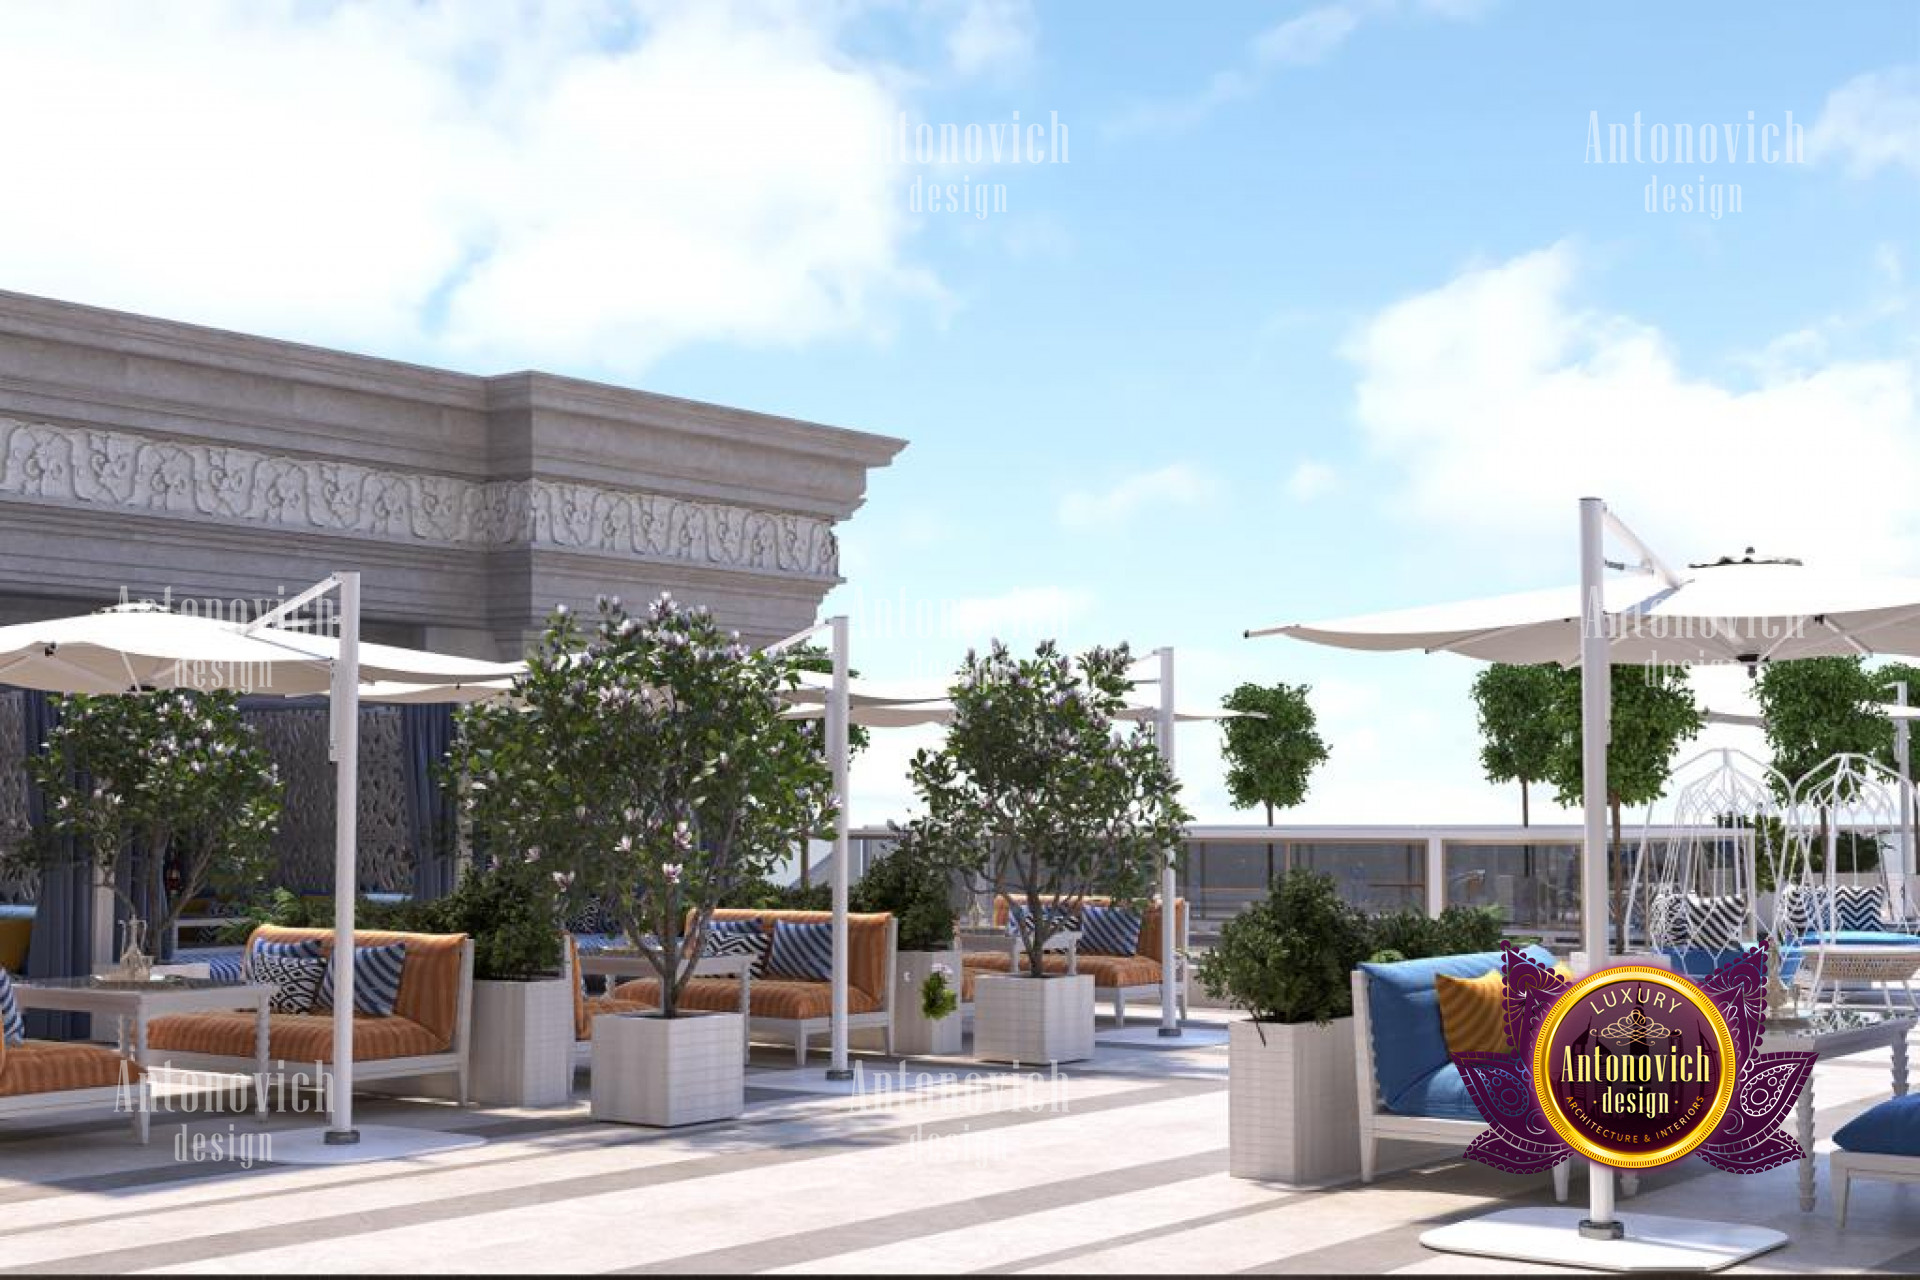 RESTAURANT & HOTEL INTERIOR DESIGN | OPEN TERRACE RESTAURANT IN DUBAI